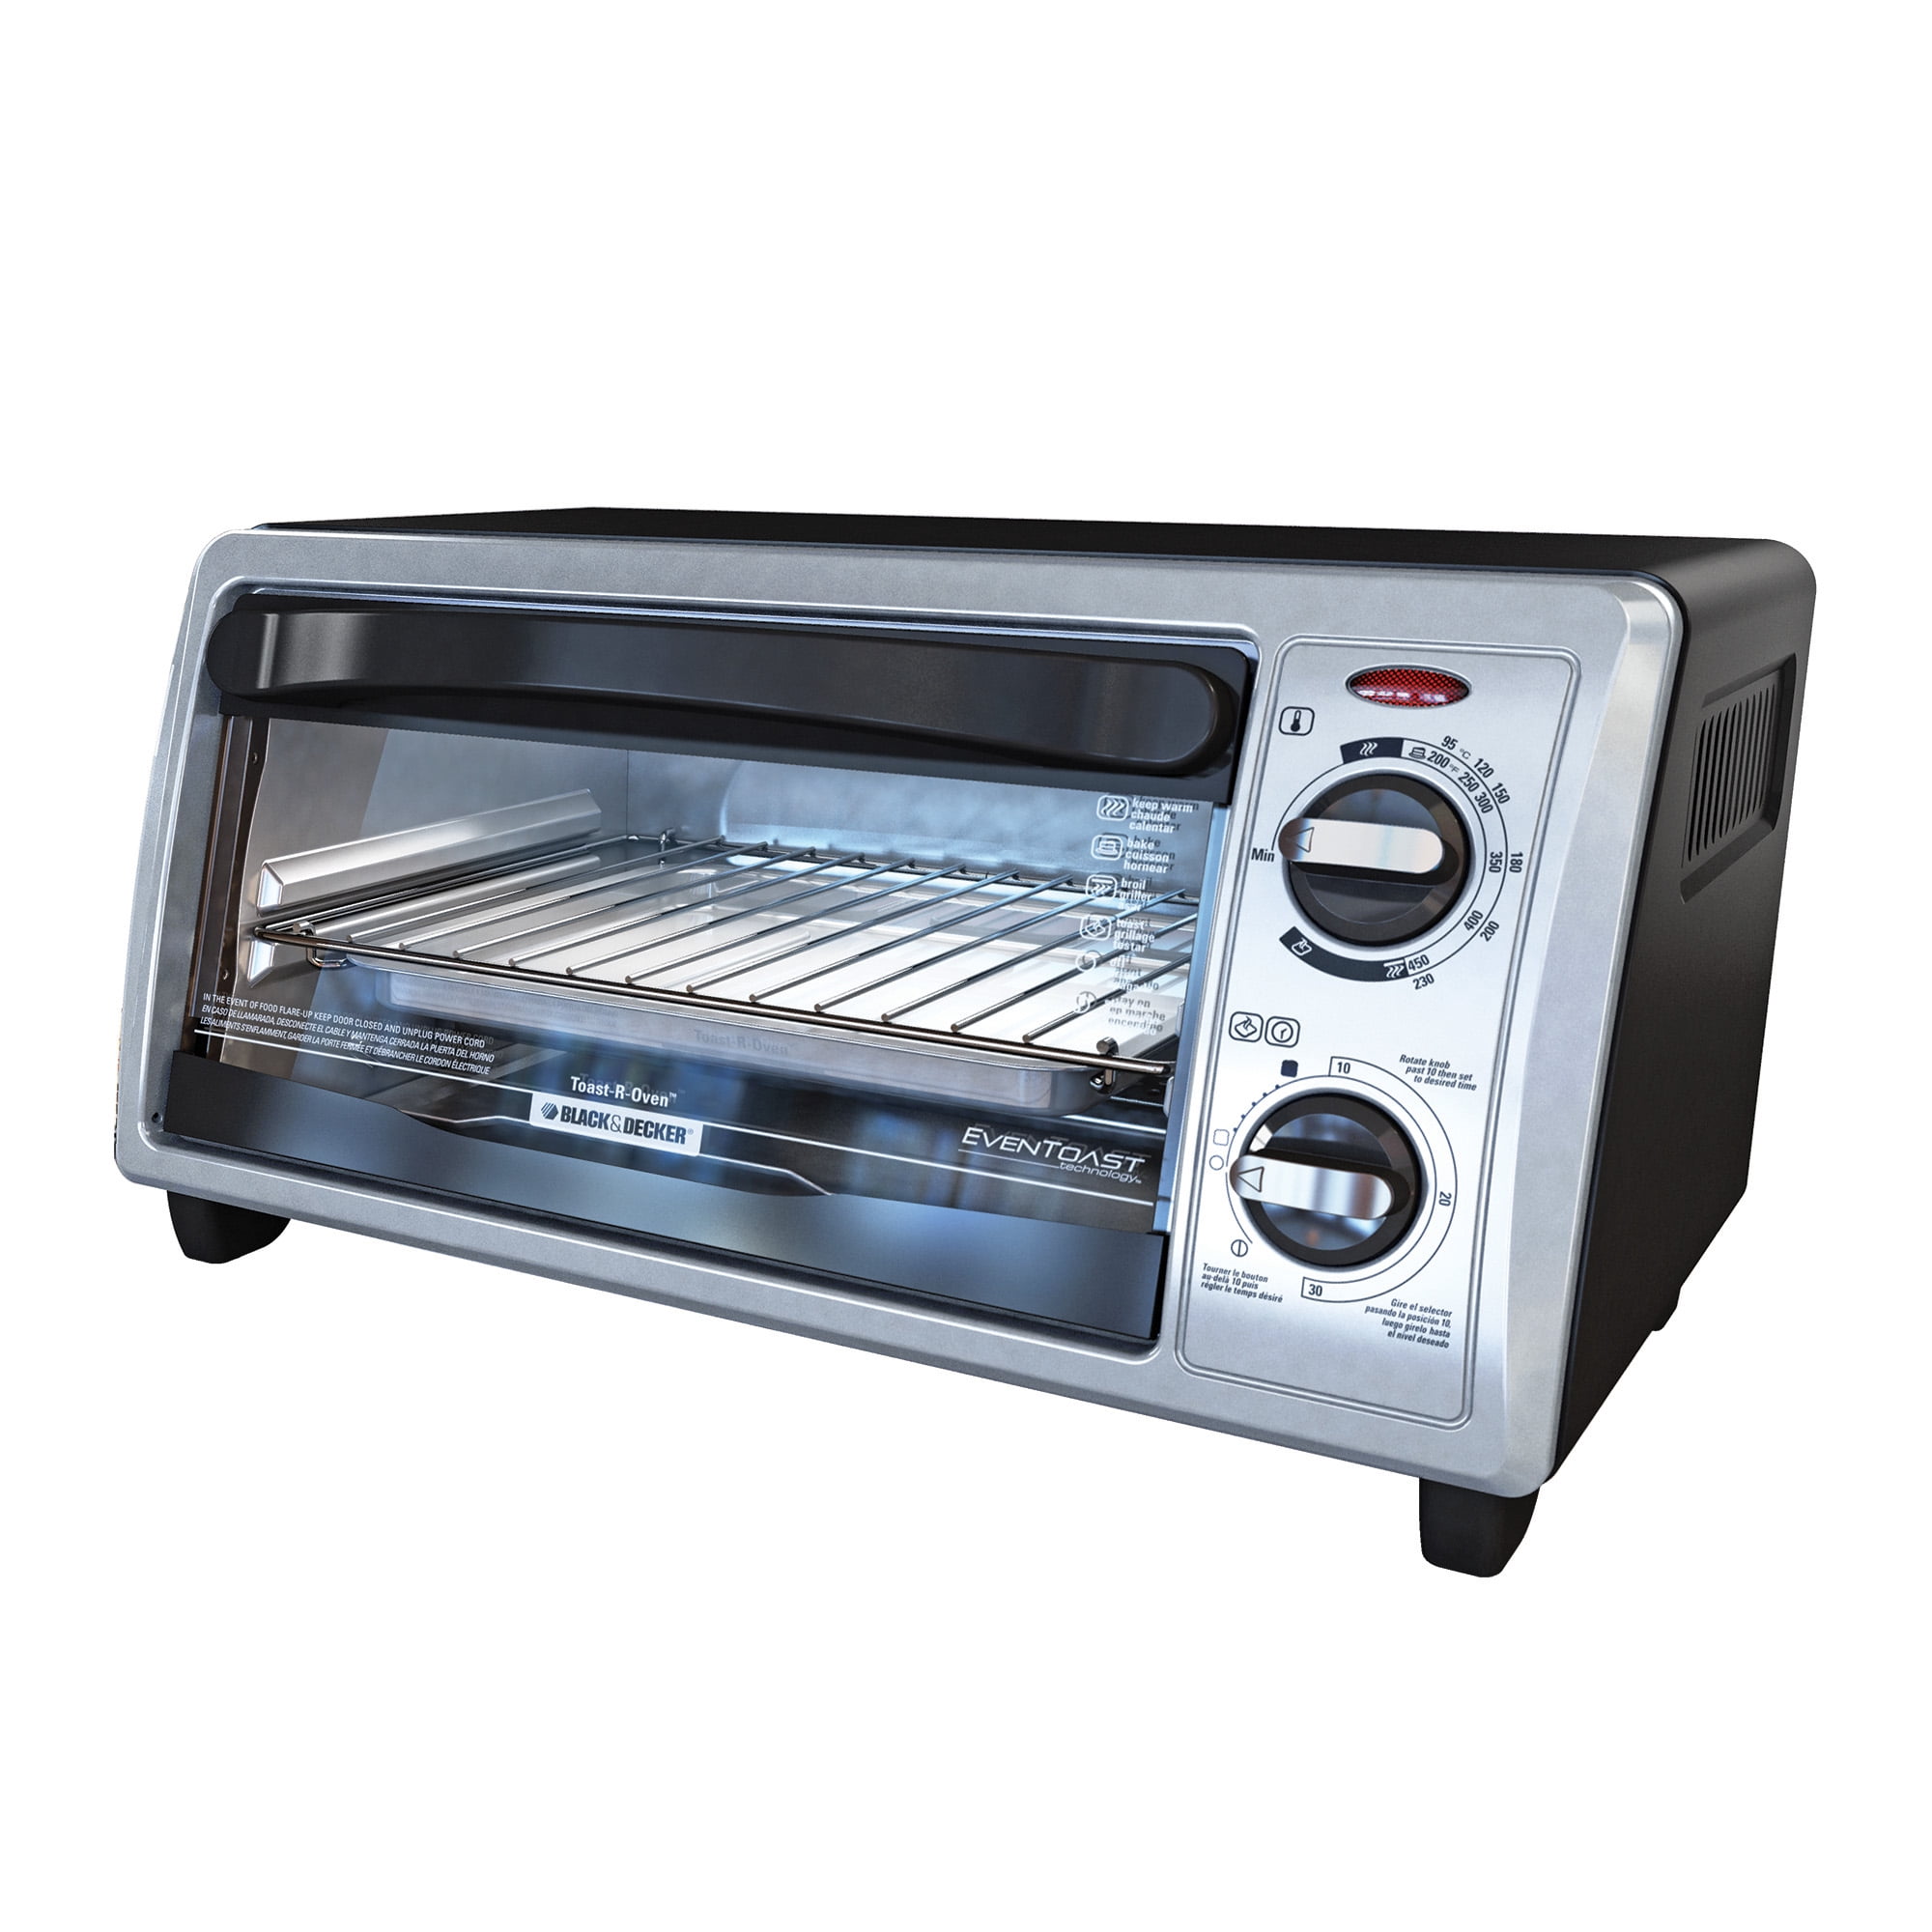 Black+Decker 4-Slice Toaster Oven Stainless Steel  - Best Buy